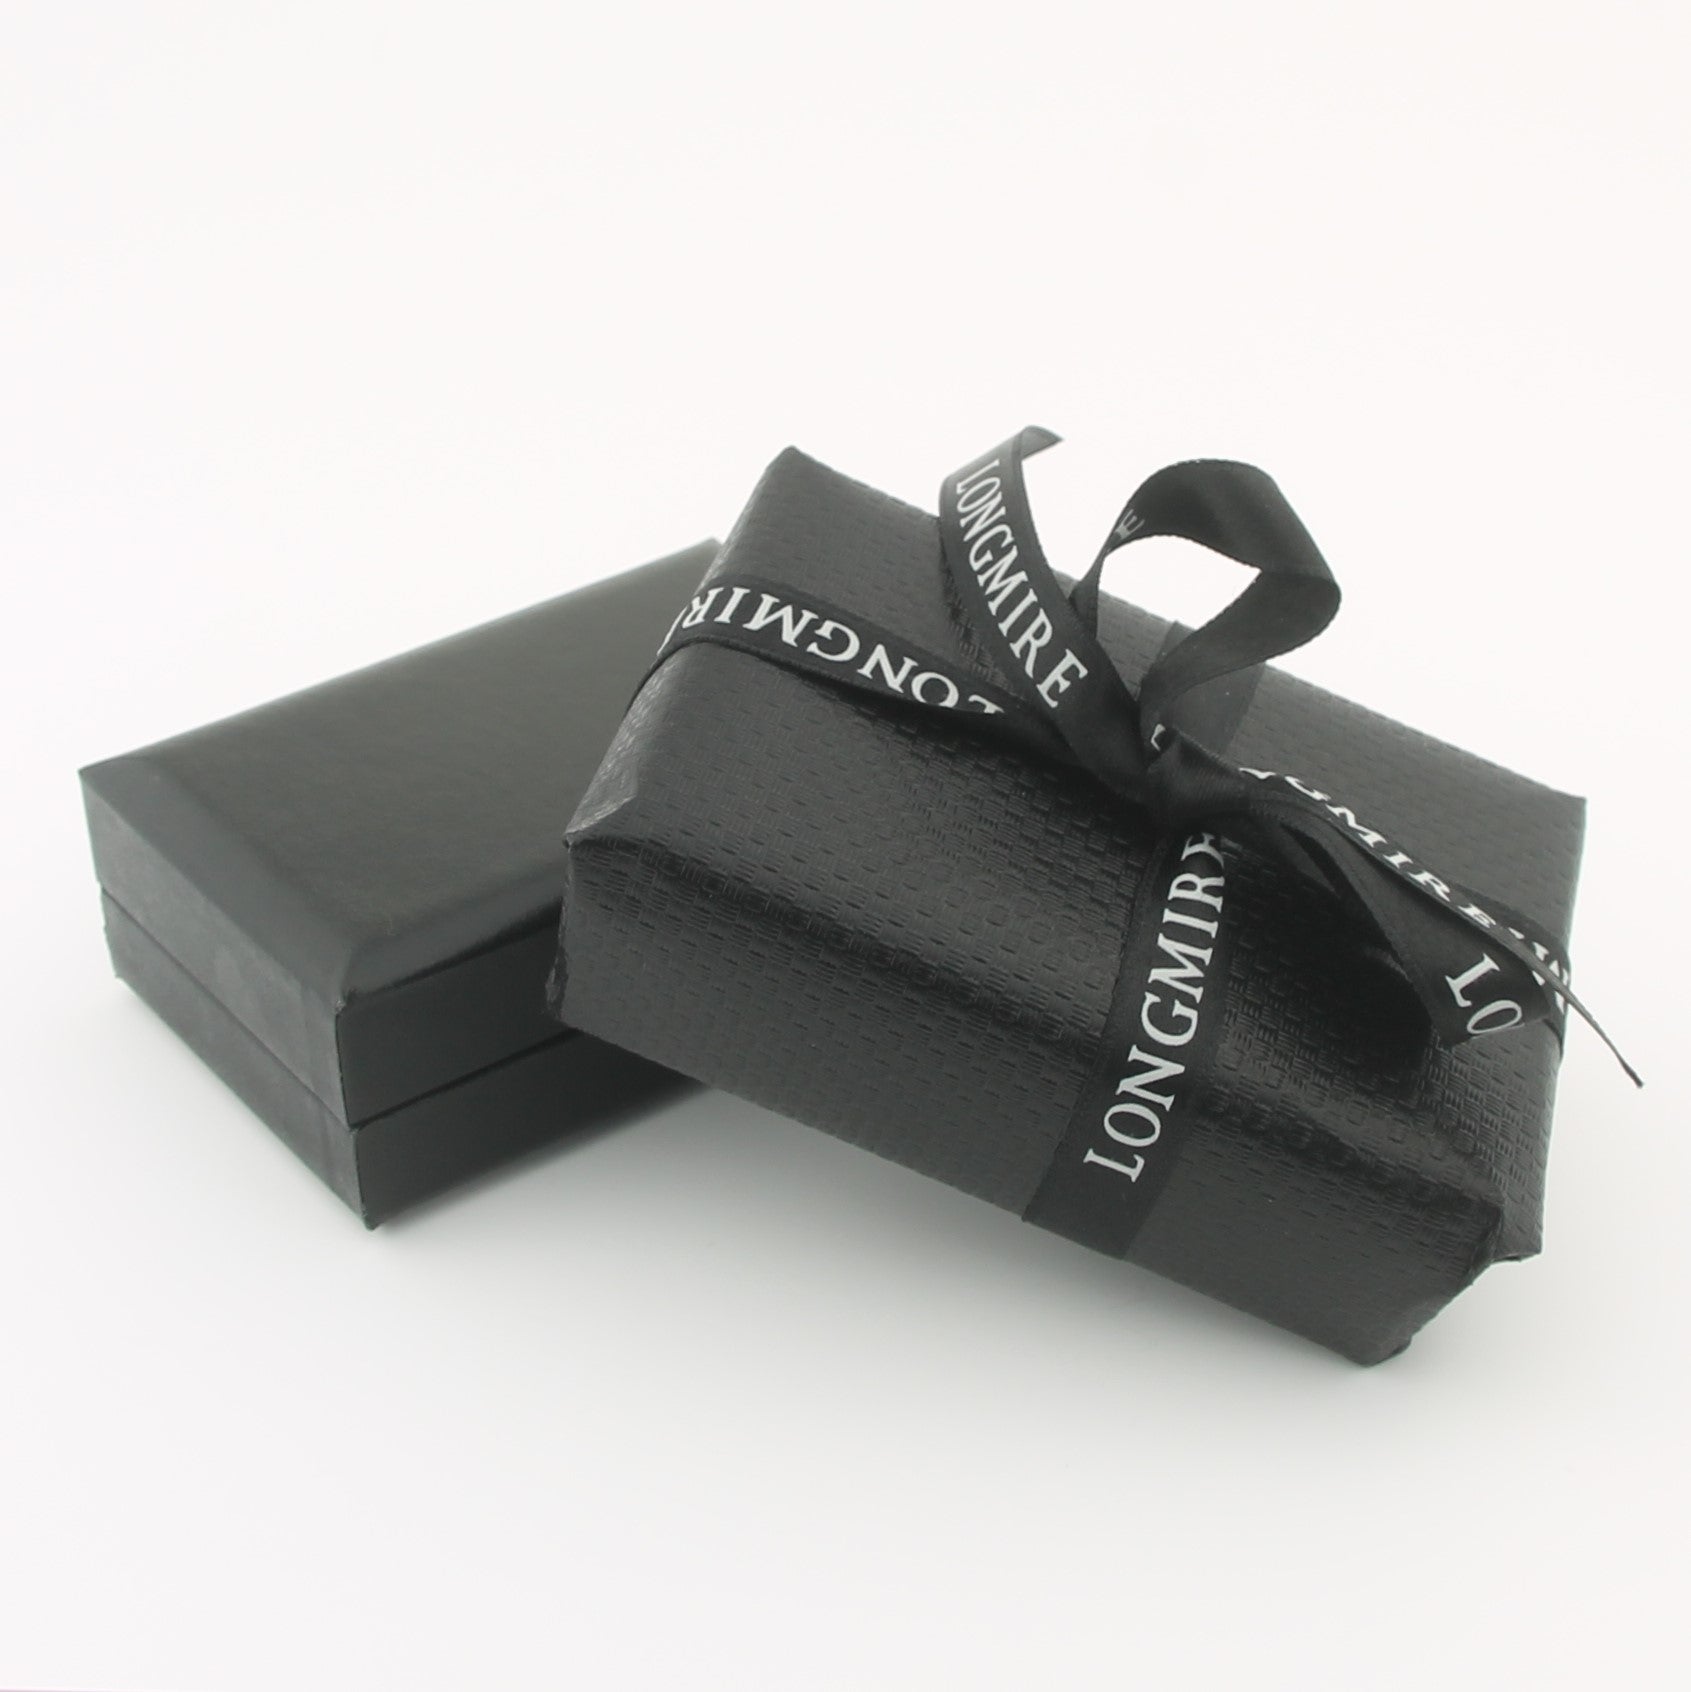 Longmire box - gift wrapped